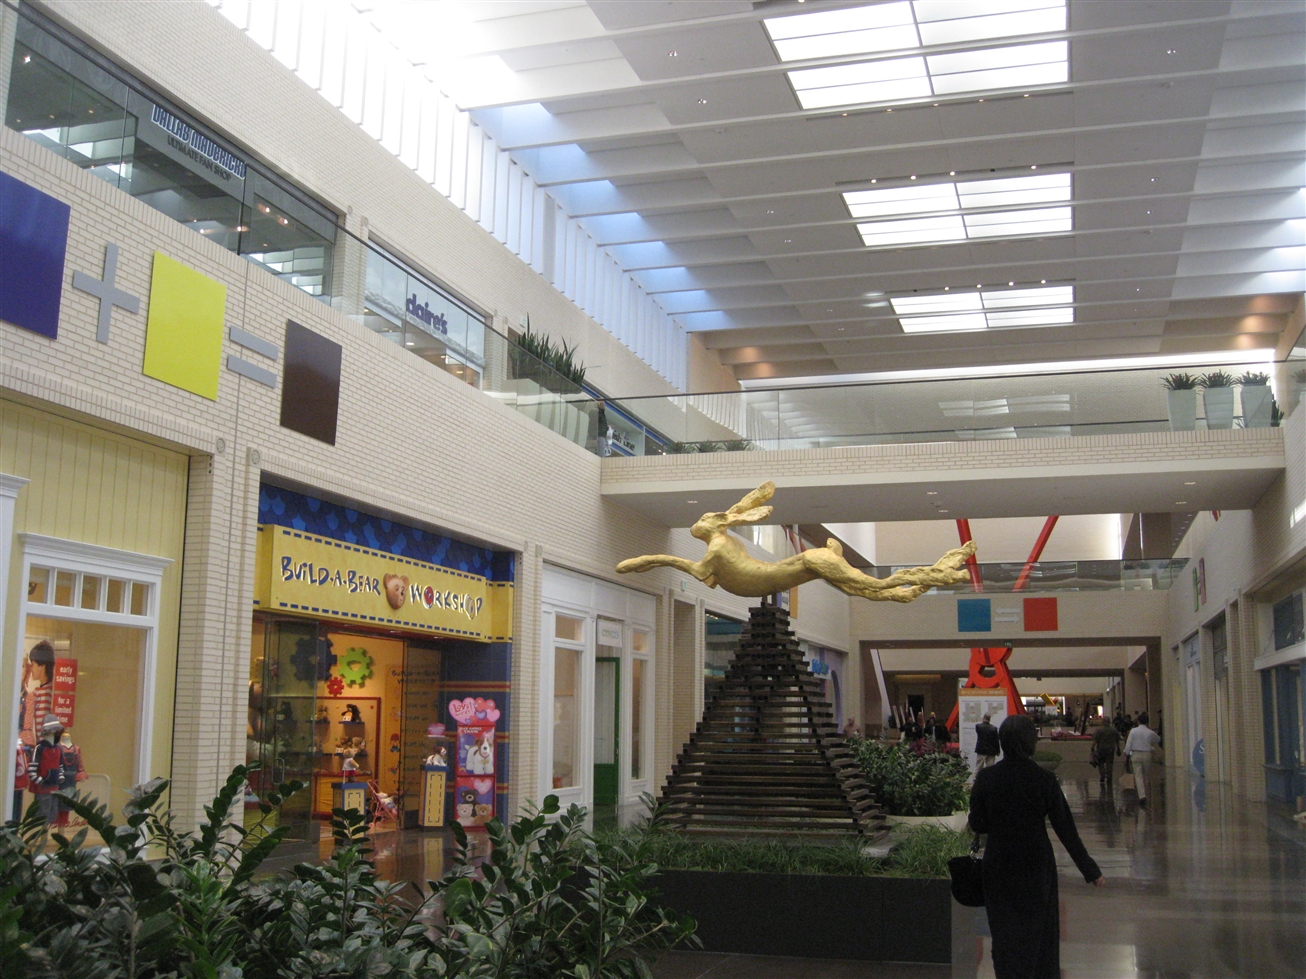 northpark mall